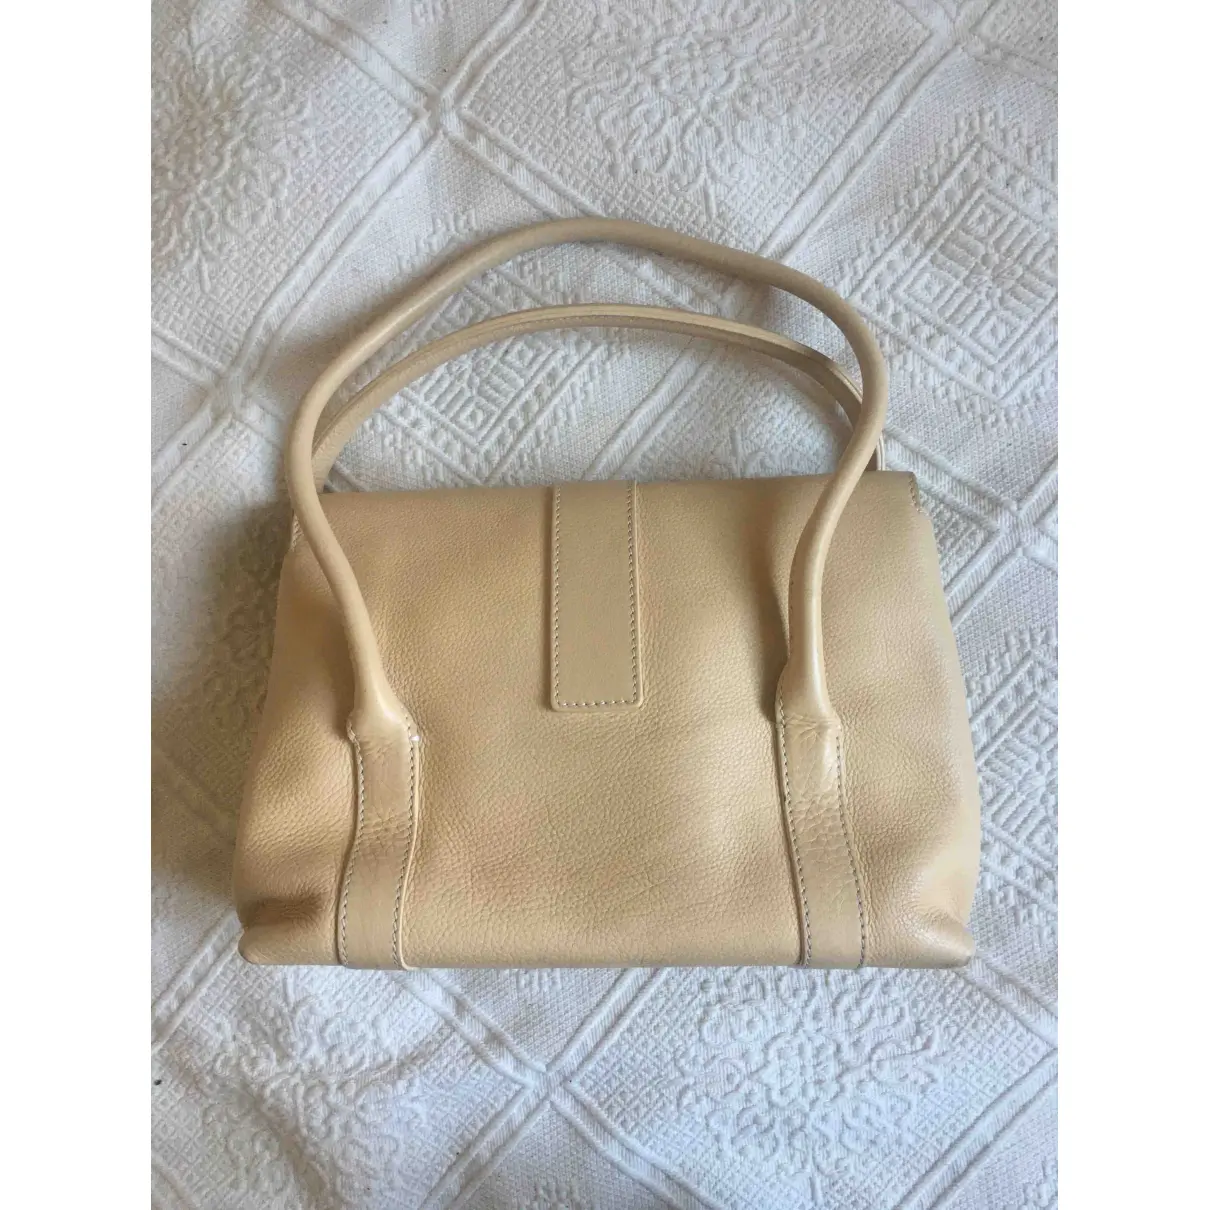 Buy Loro Piana Leather handbag online